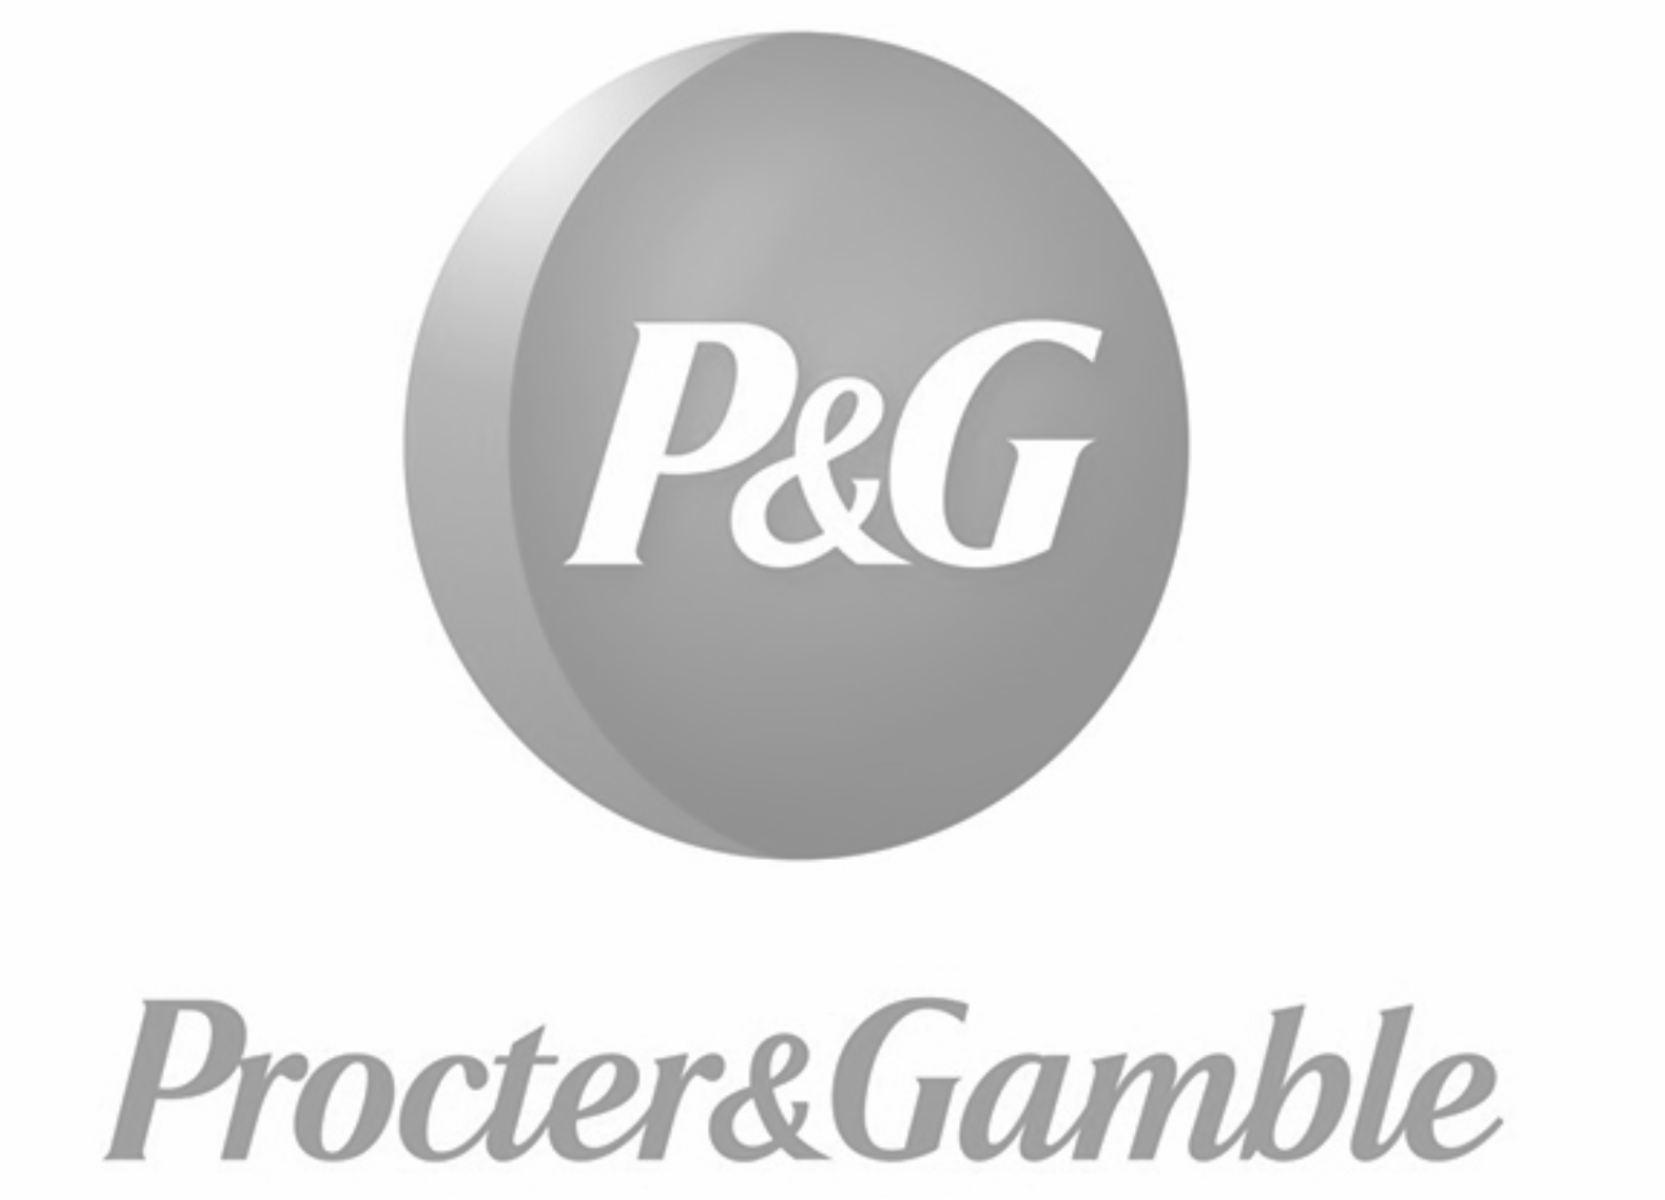 Proctor & Gamble Mfg. Co.